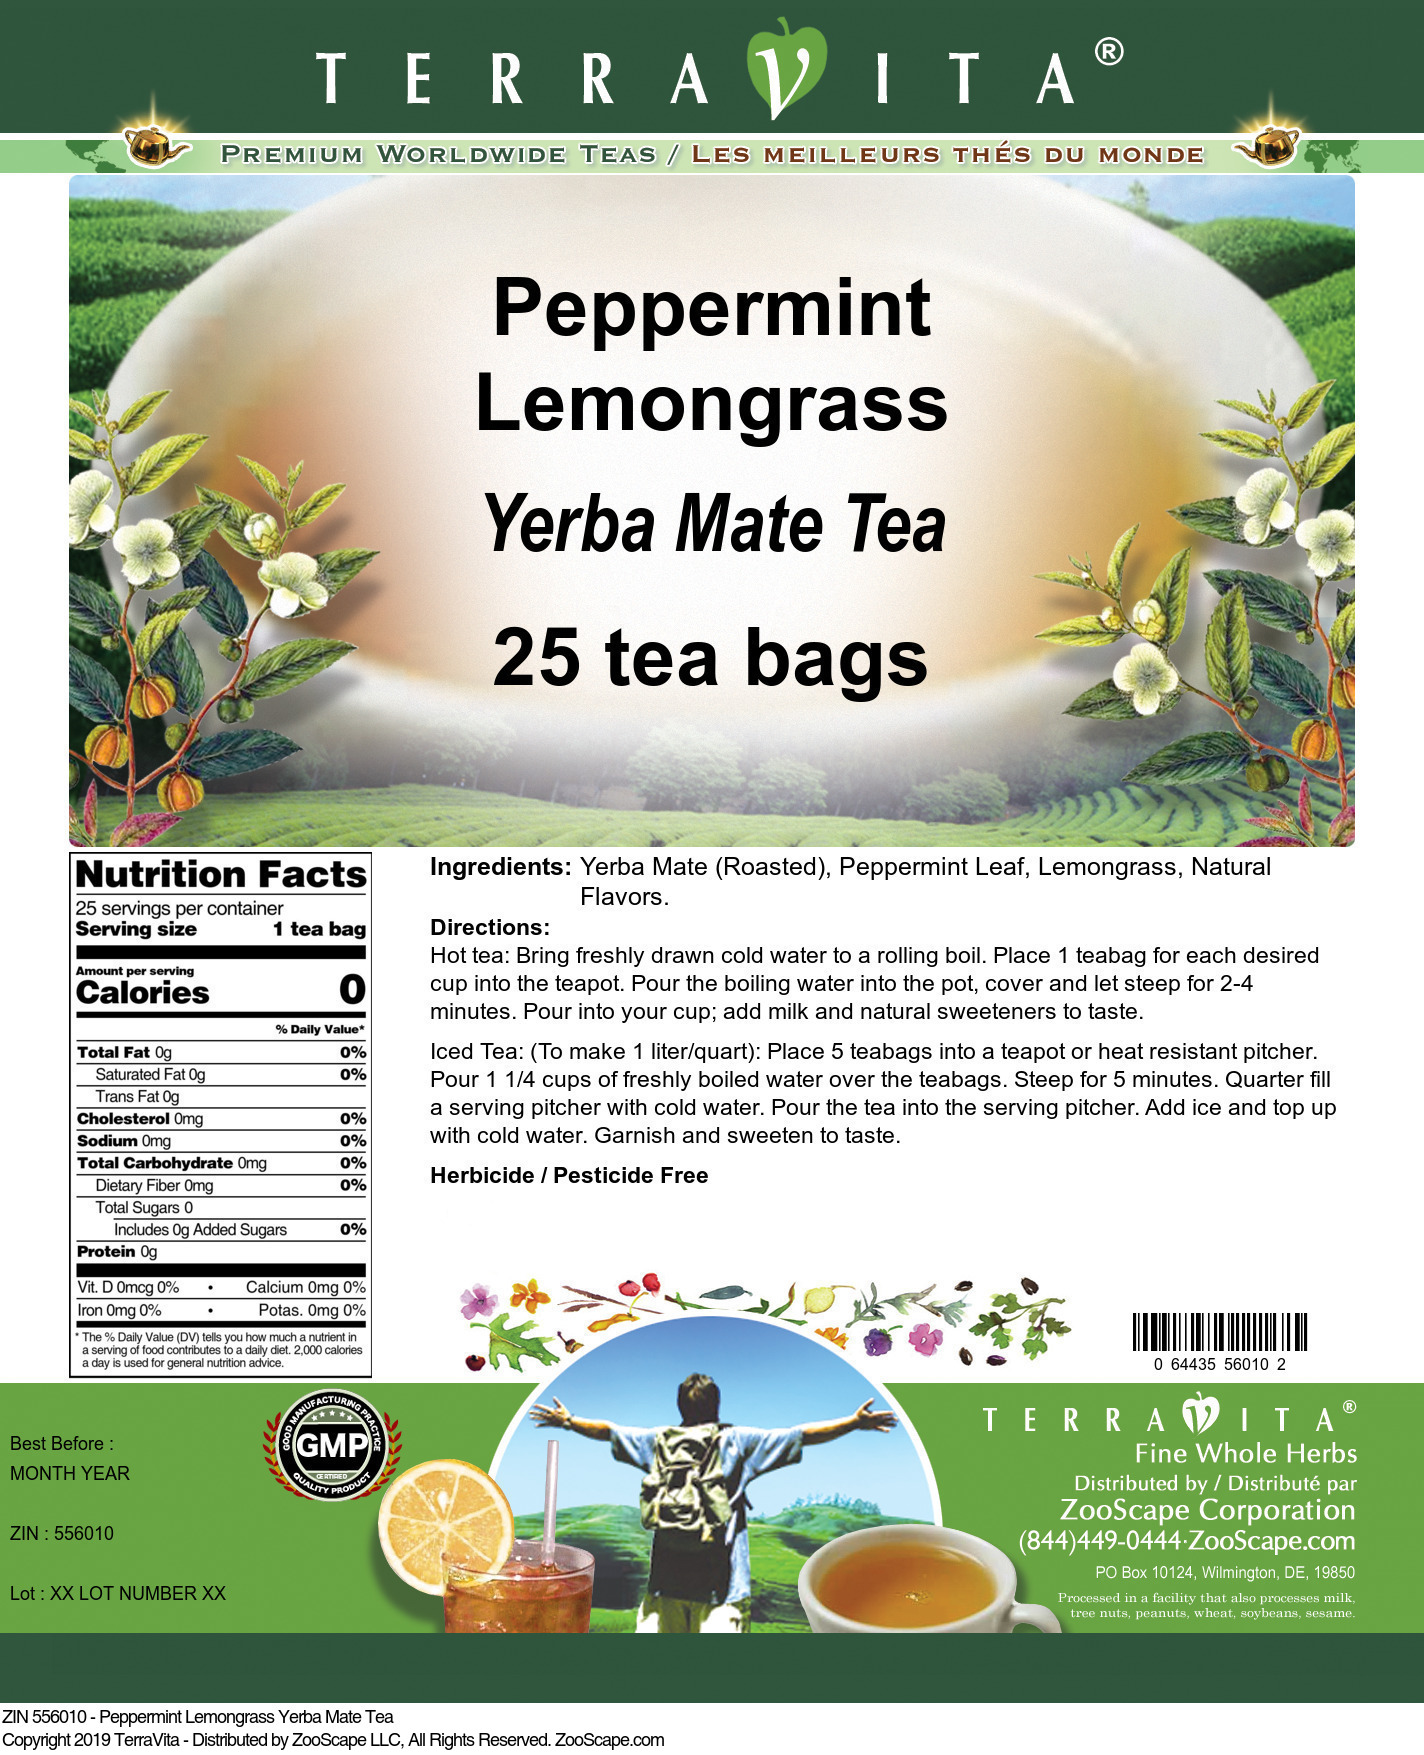 Peppermint Lemongrass Yerba Mate Tea - Label